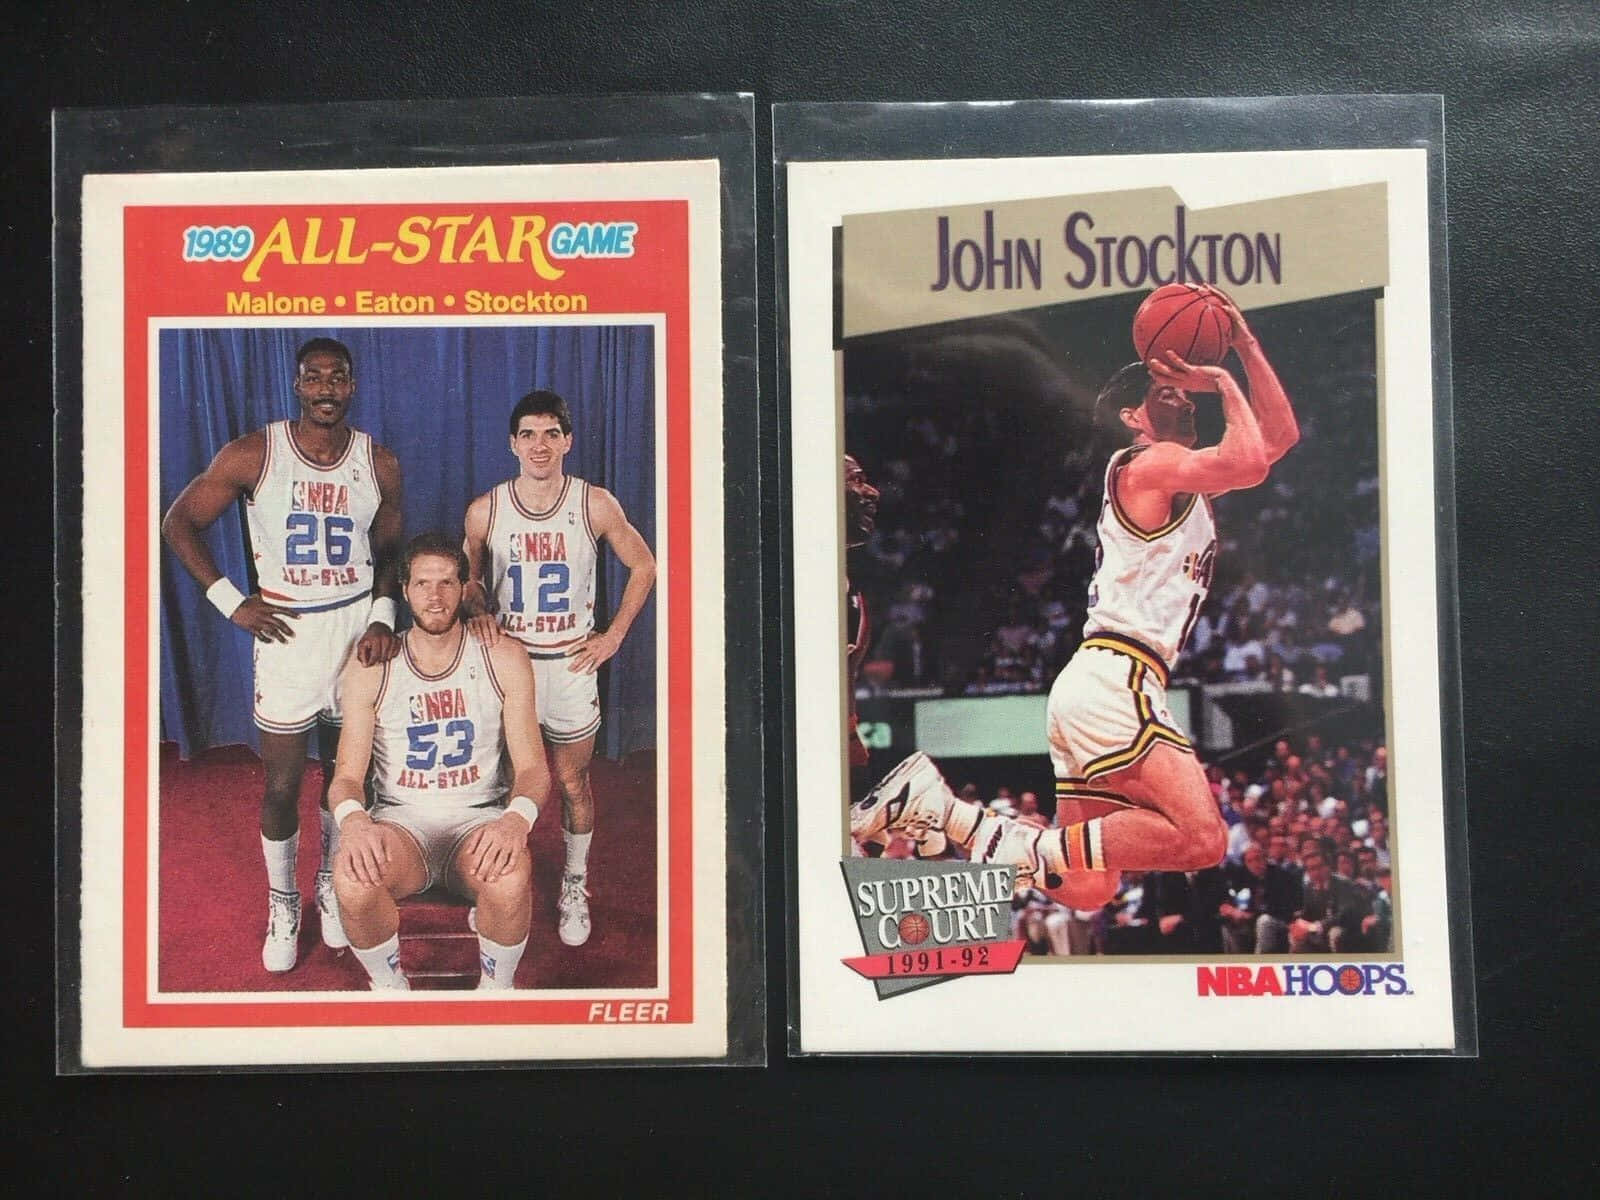 Download John Stockton NBA Hoops Trading Cards Wallpaper | Wallpapers.com